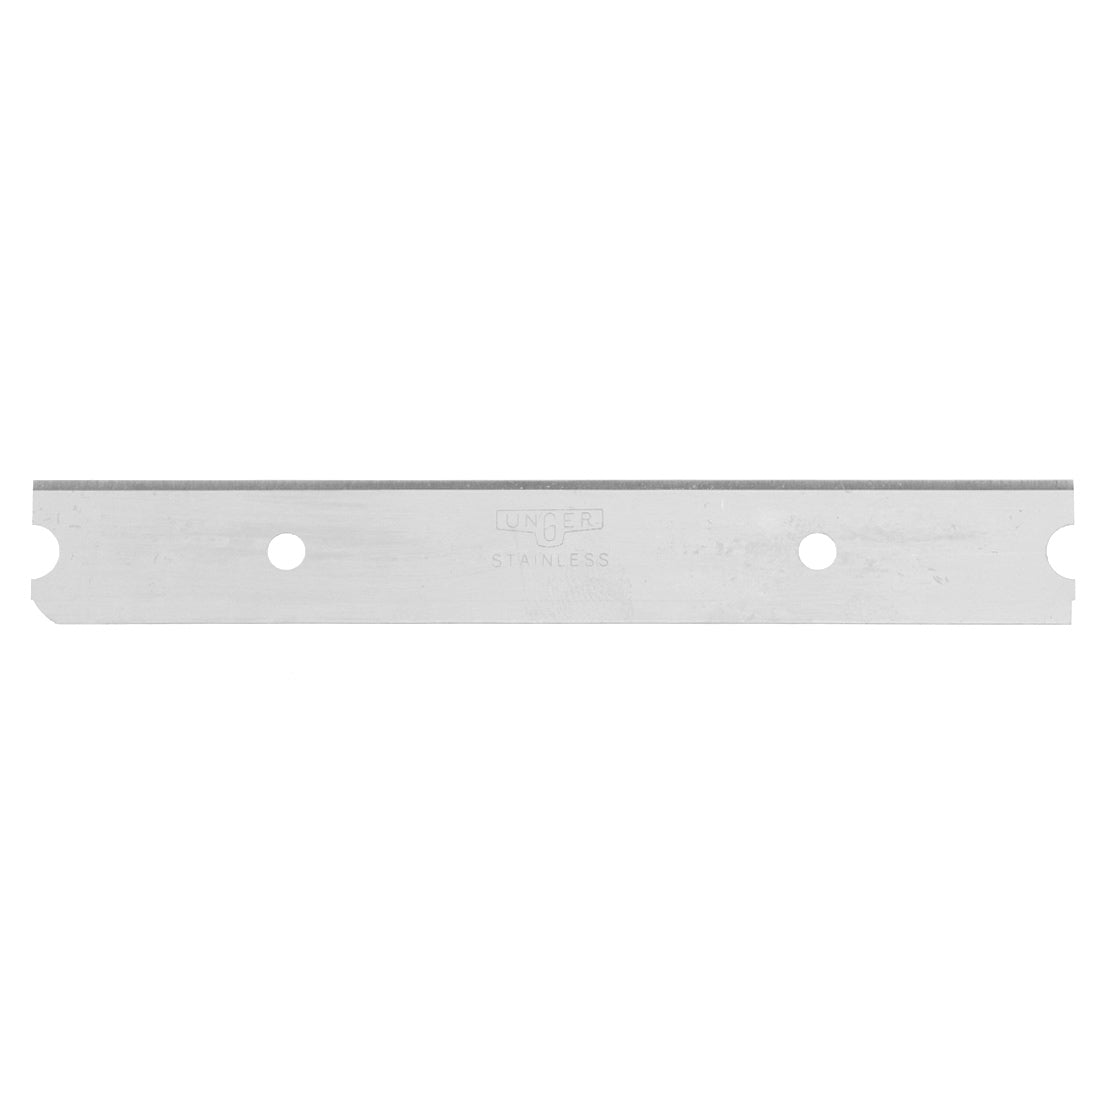 Unger Stainless Steel Blades - Fits Unger Scraper Maxi Scraper - 4 Inch Blade Front View